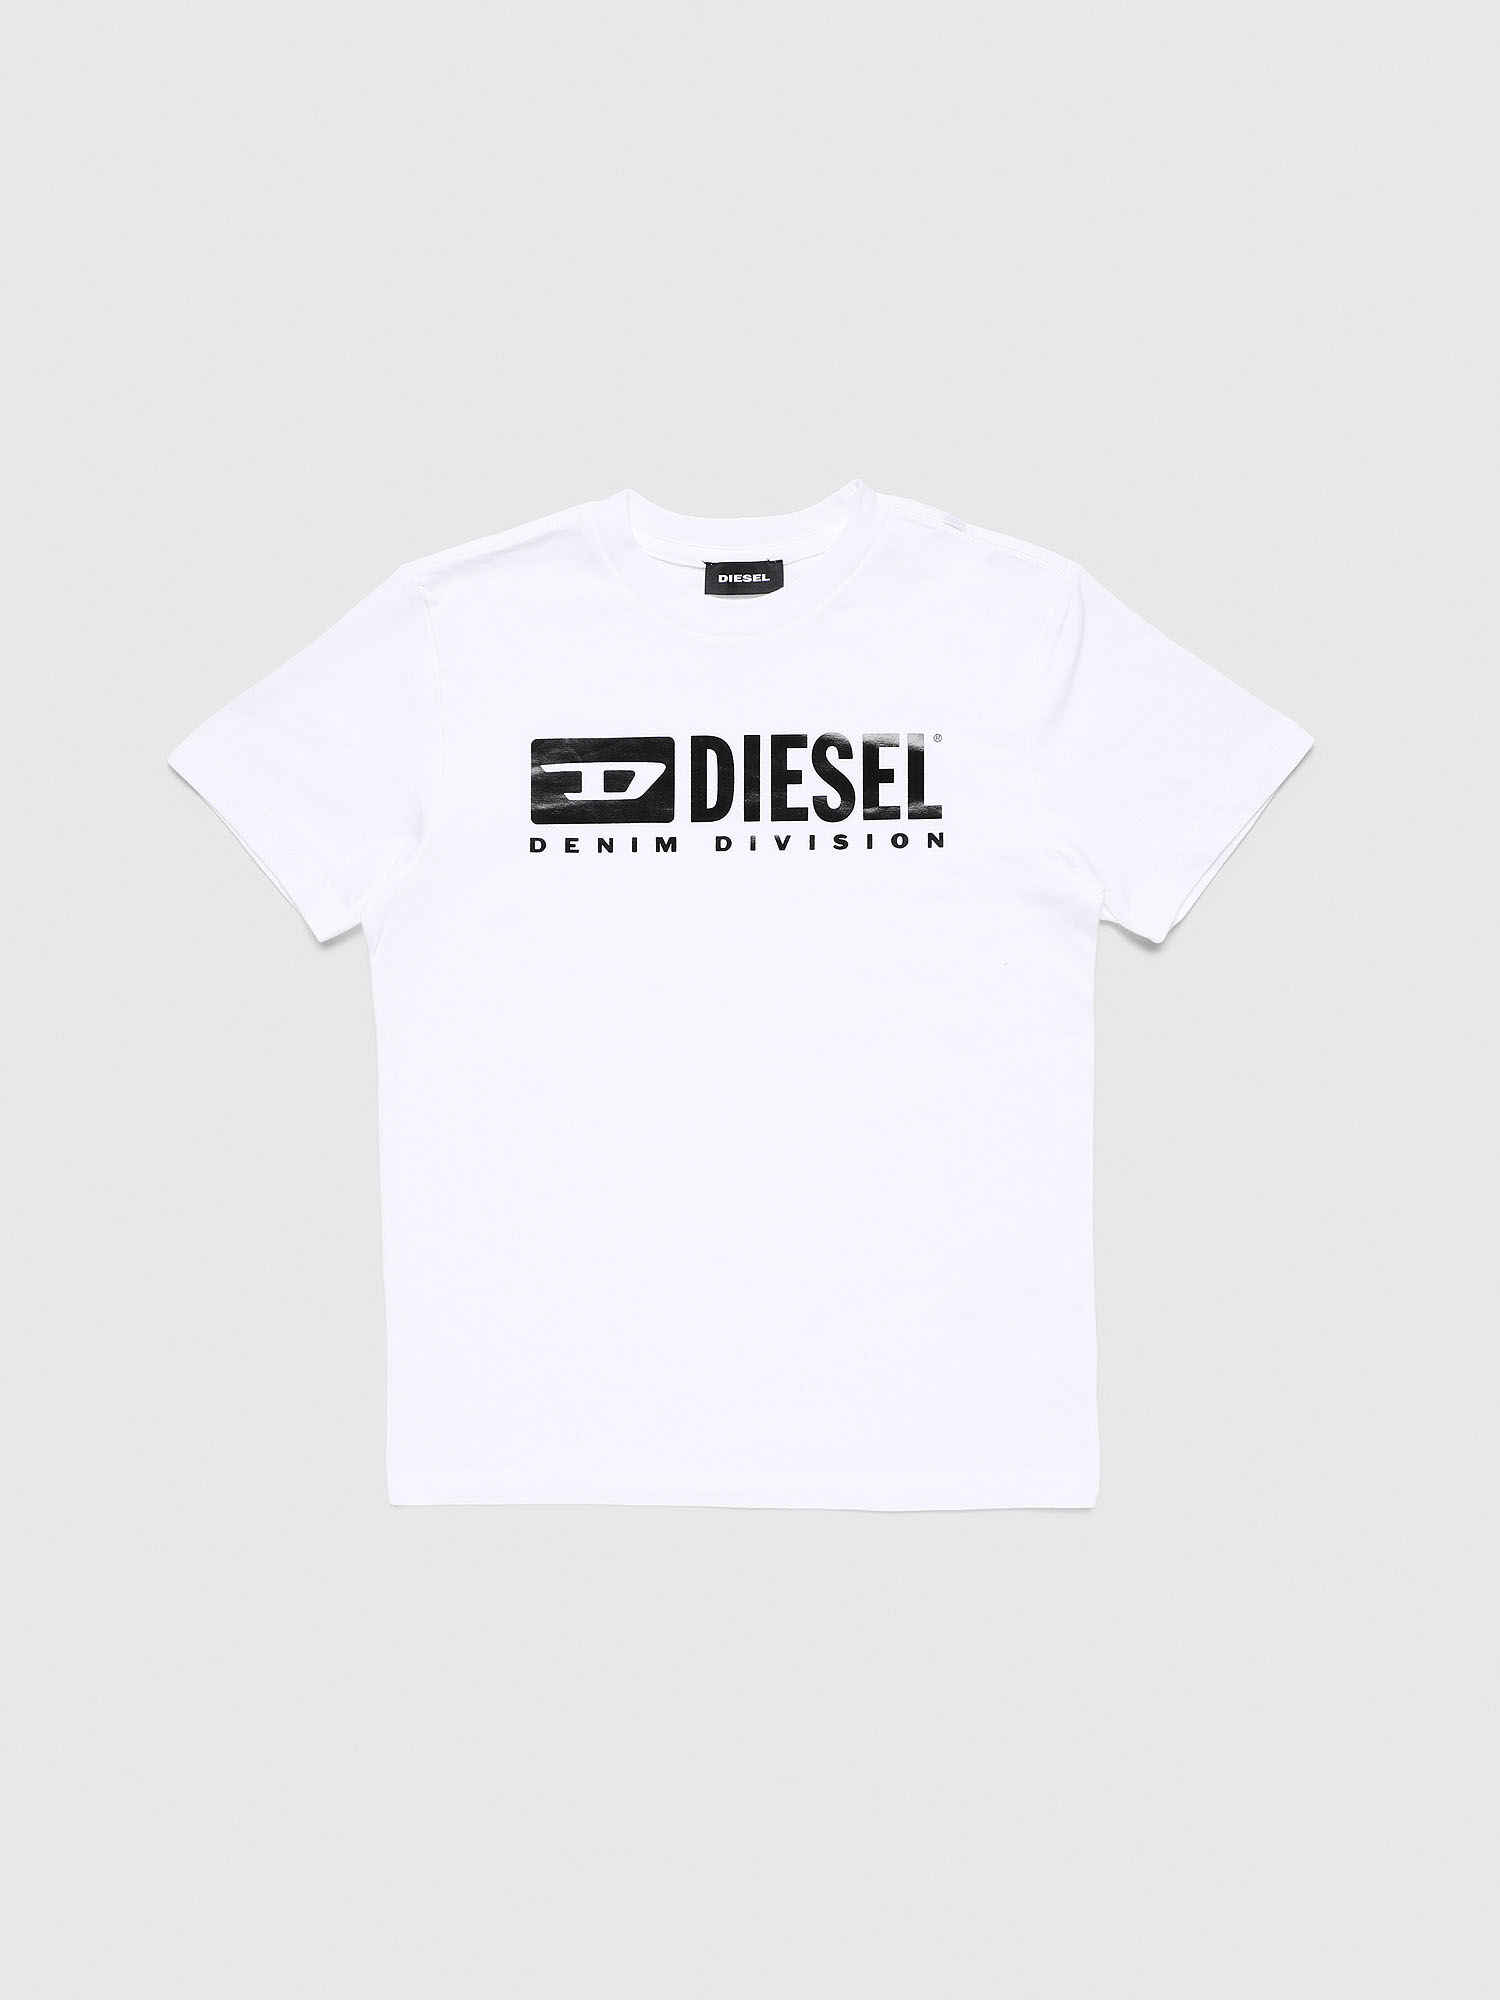 Diesel - TJDIVISION, White - Image 1